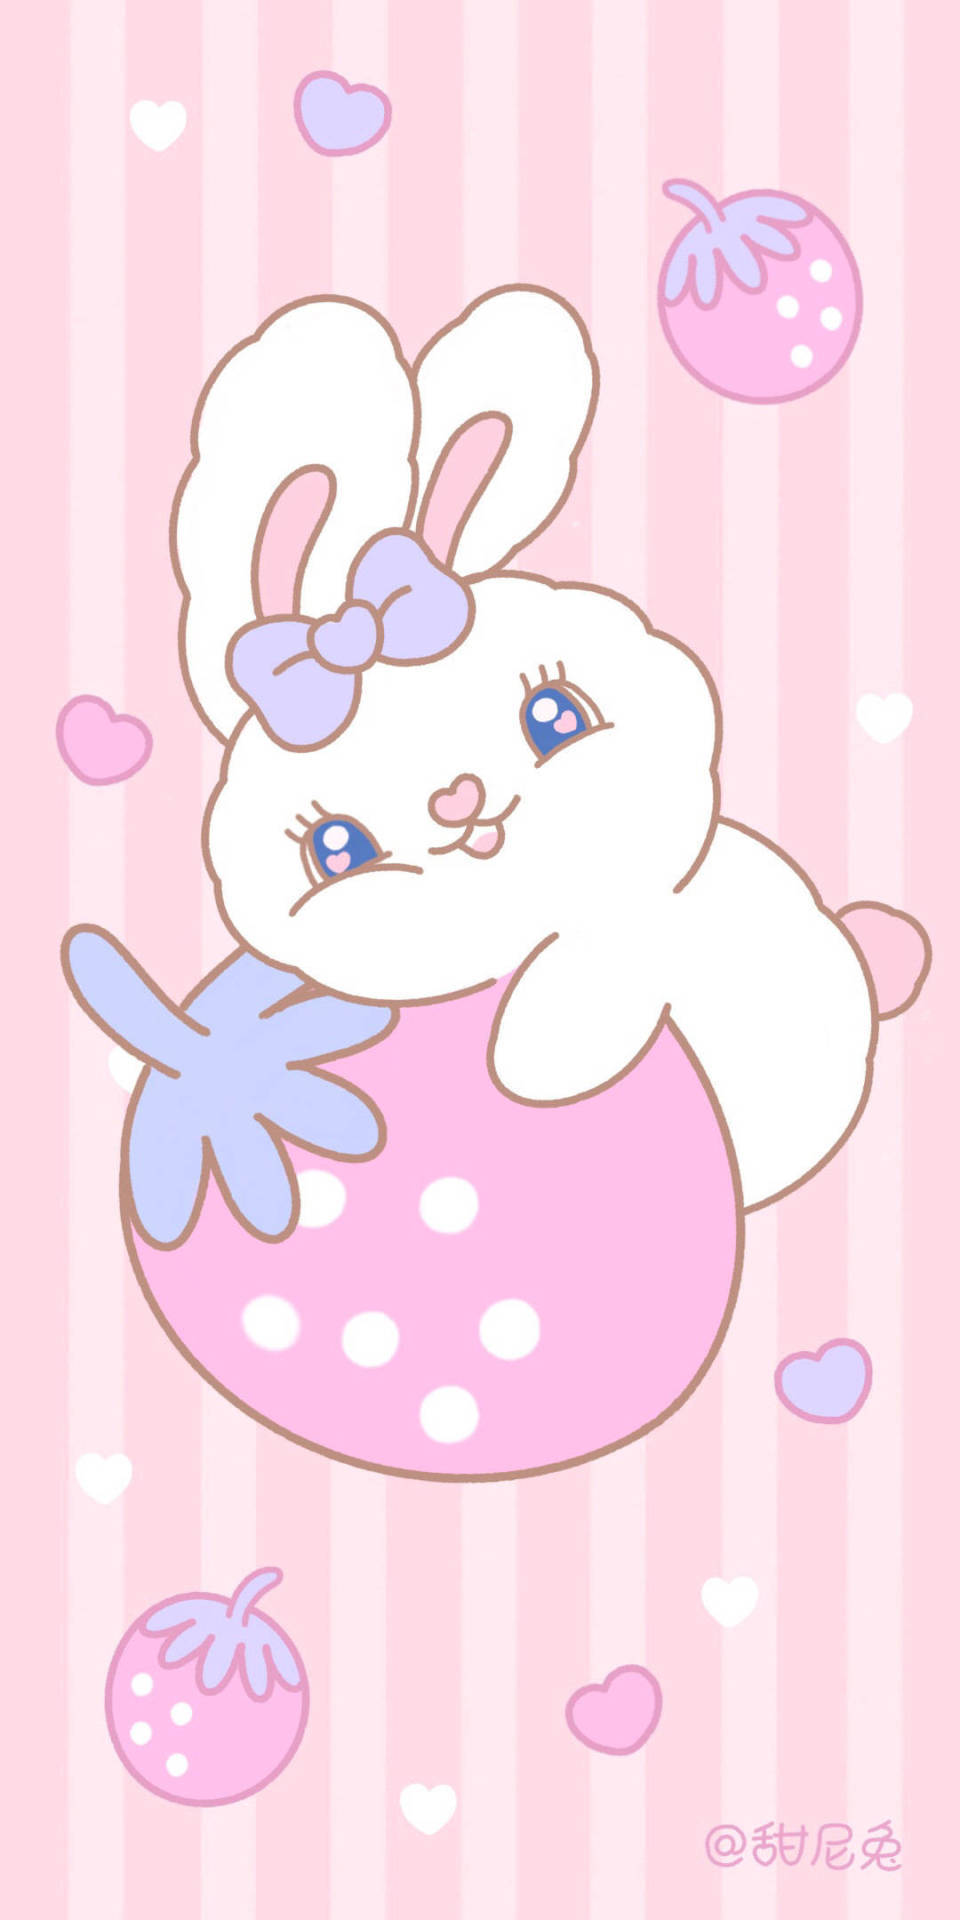 White Rabbit Embracing Strawberry Background